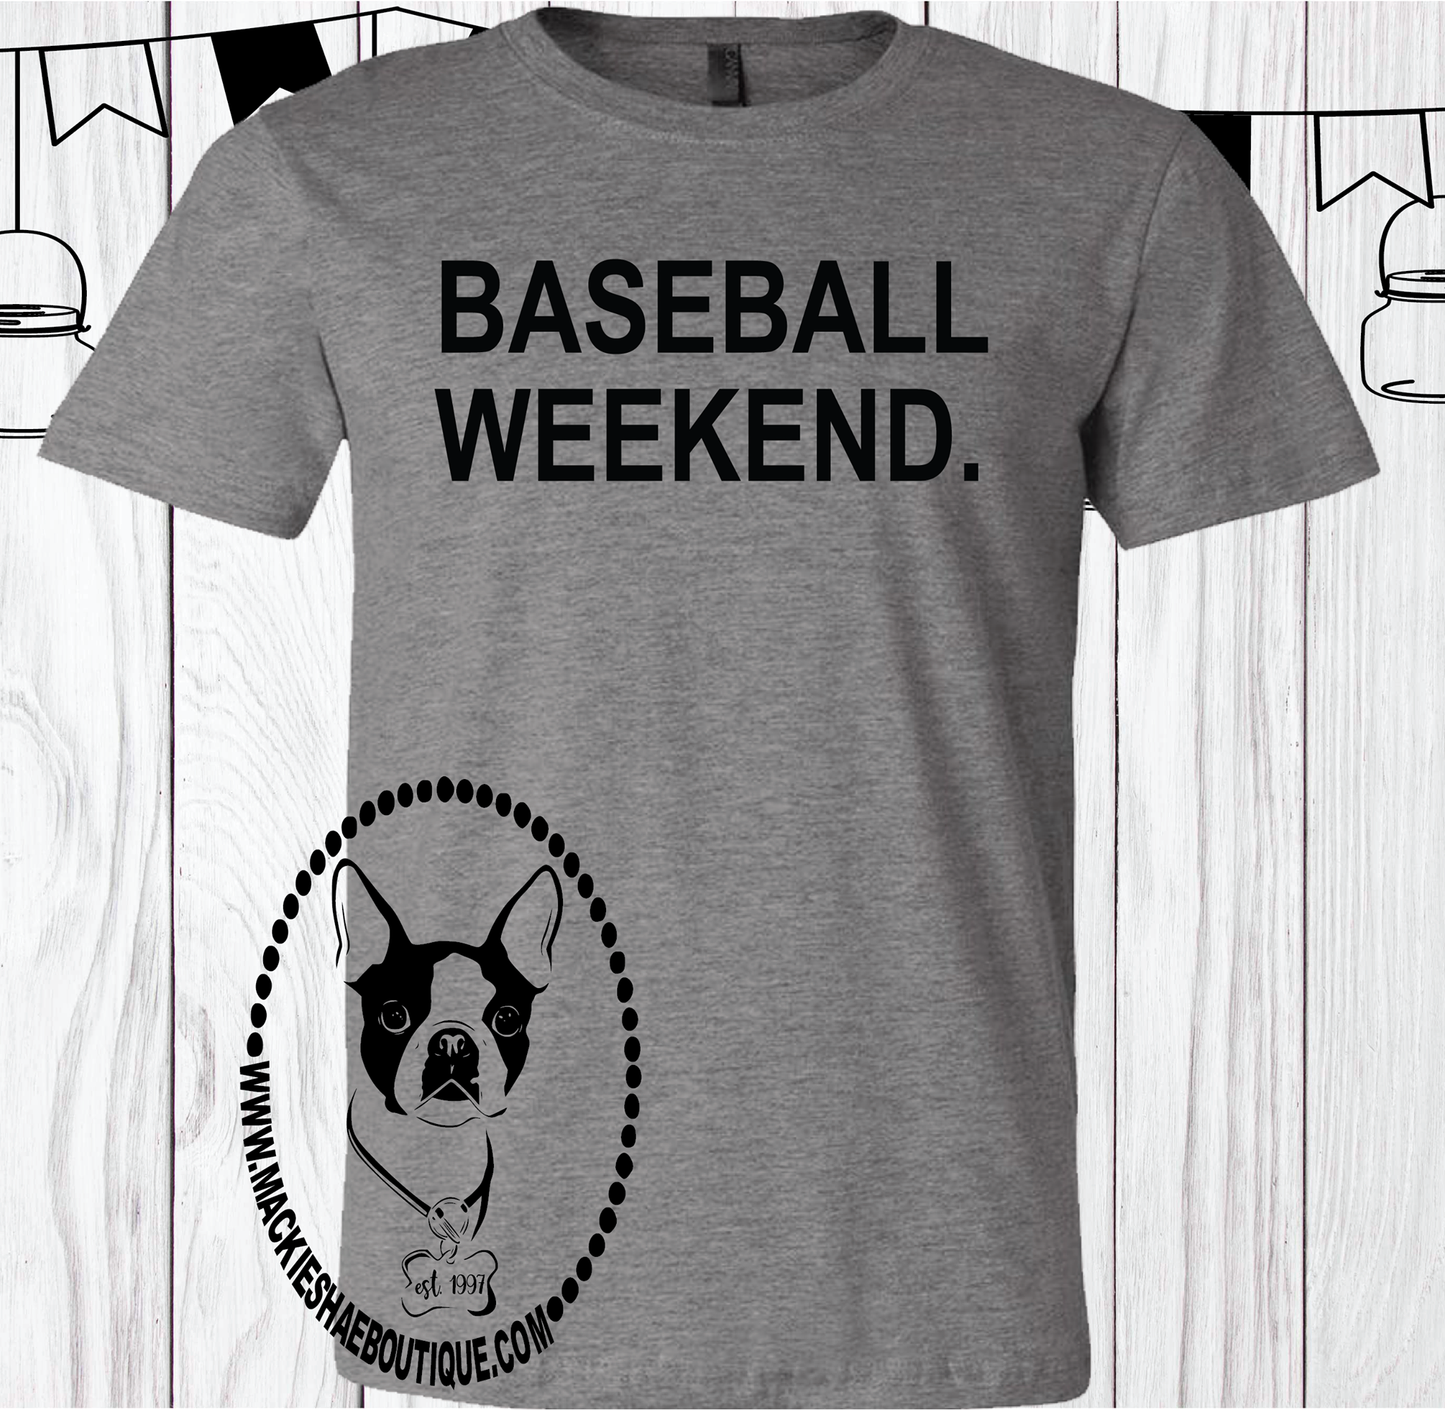 Baseball Weekend. Custom Shirt, Short Sleeve